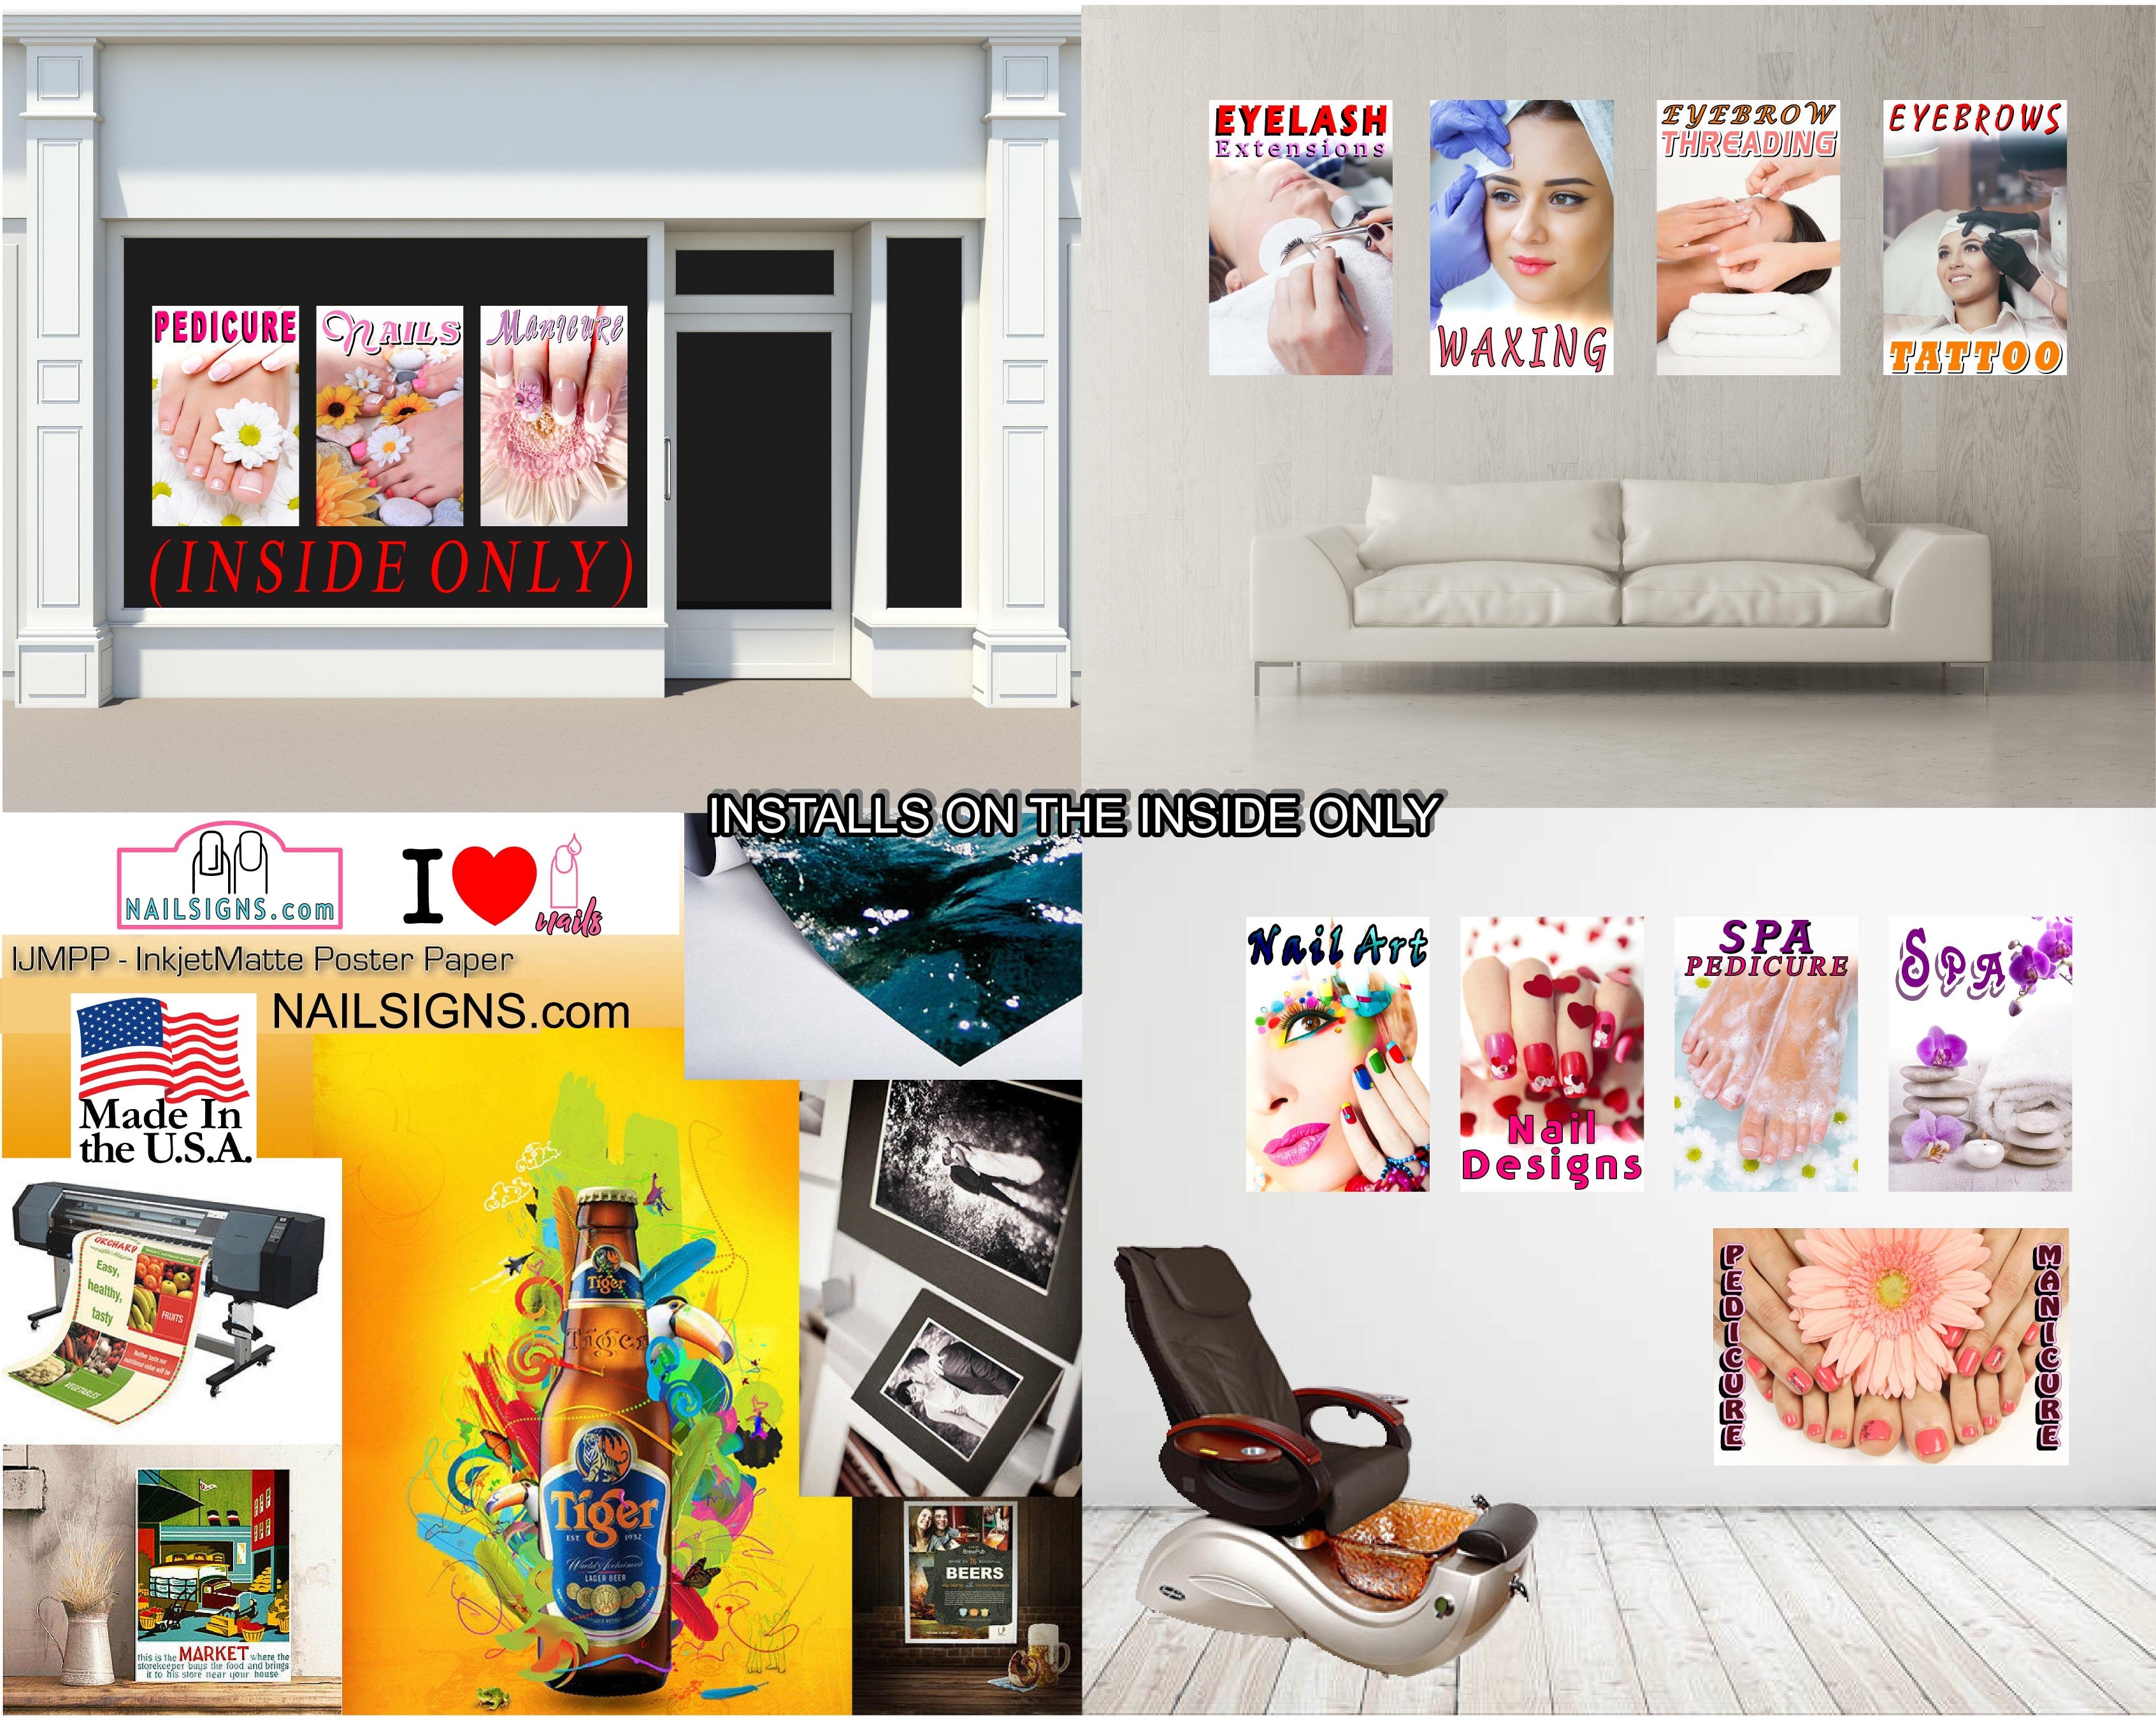 Pedicure & Manicure 19 Photo-Realistic Paper Poster Premium Matte Interior Inside Sign Advertising Marketing Wall Window Non-Laminated Horizontal